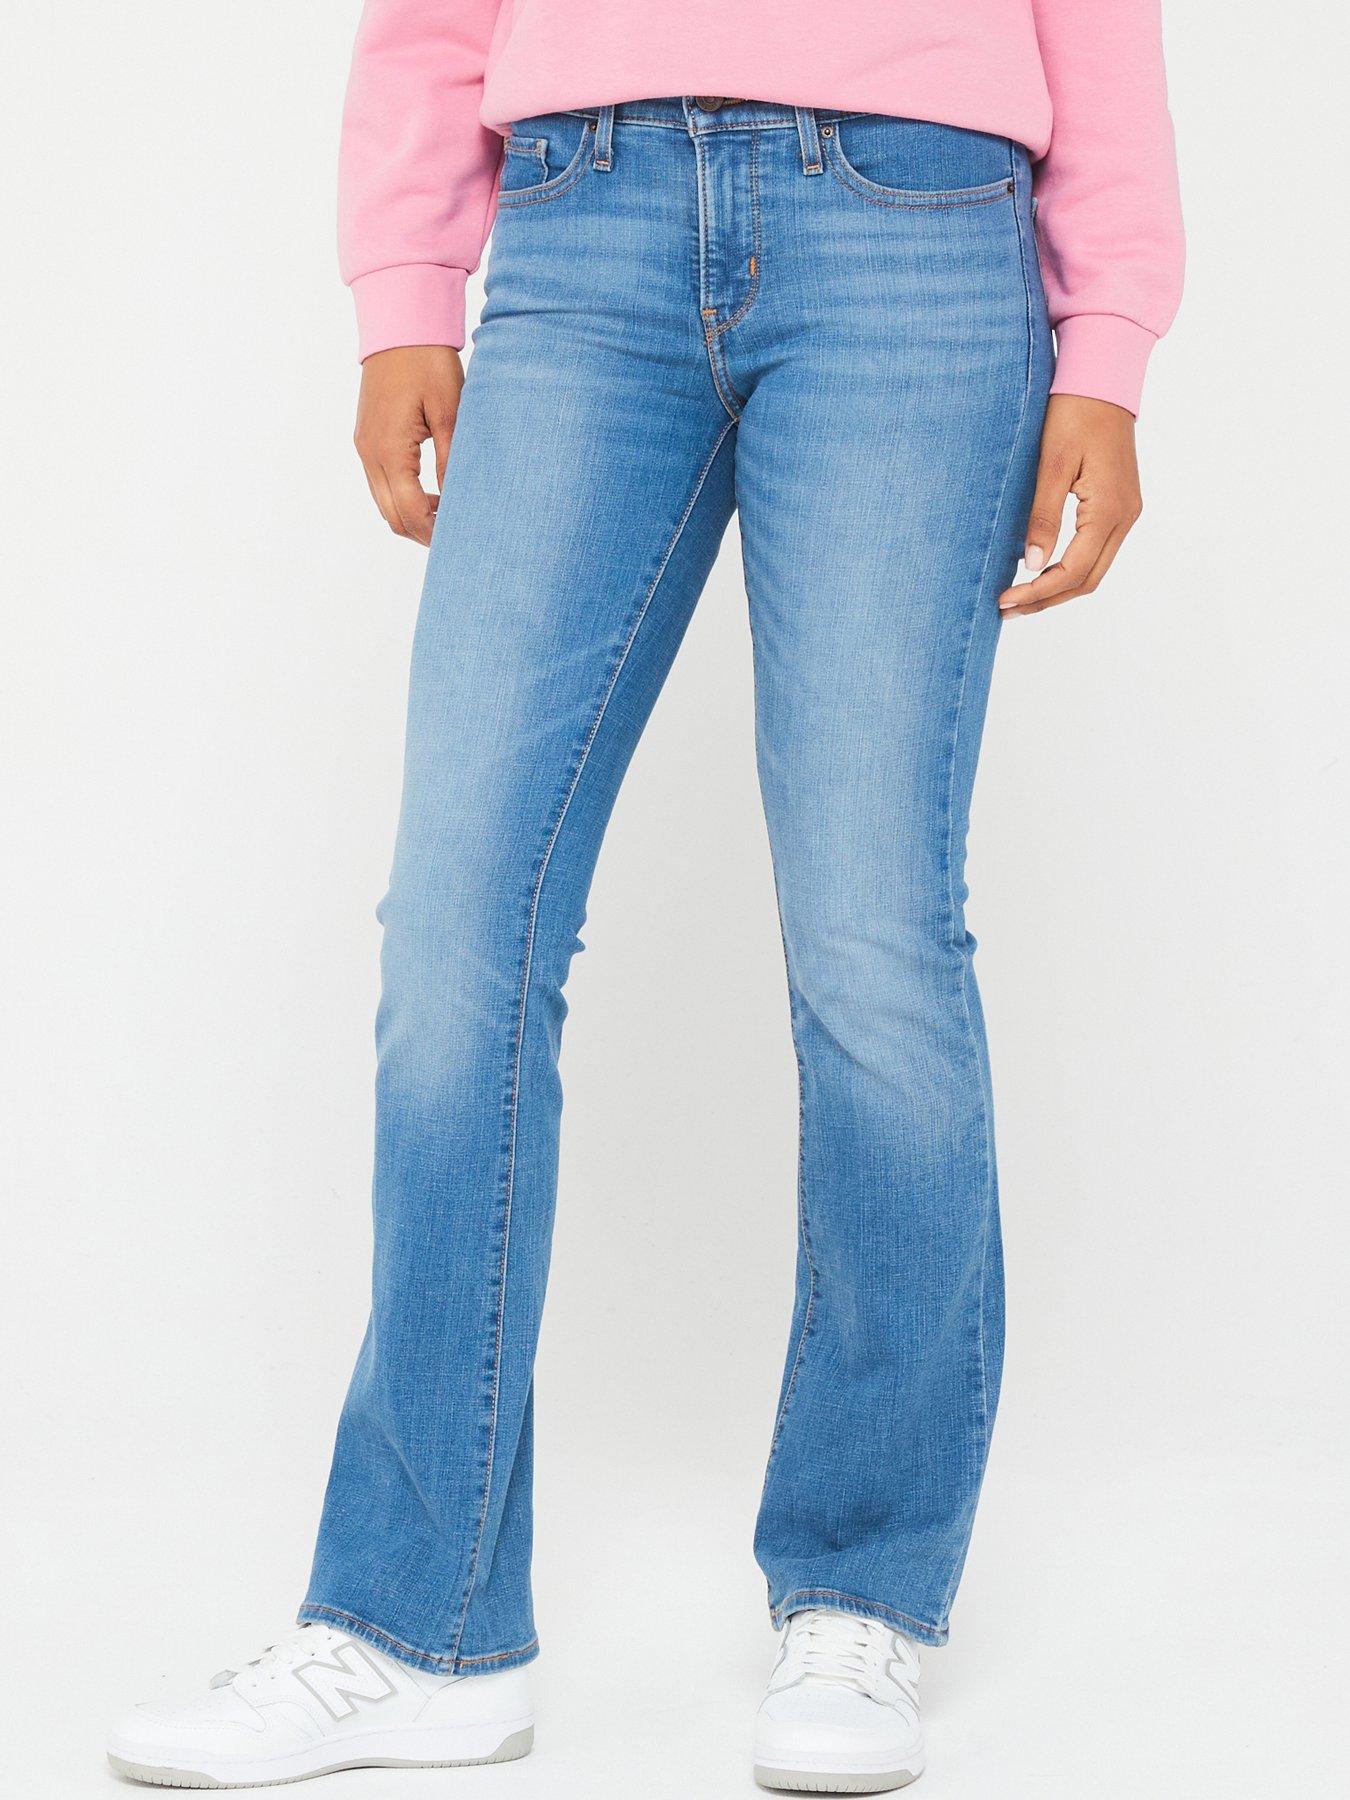 Cotton On Jean Shorts Size 4 mid classic 91 Blue Deni… - Gem